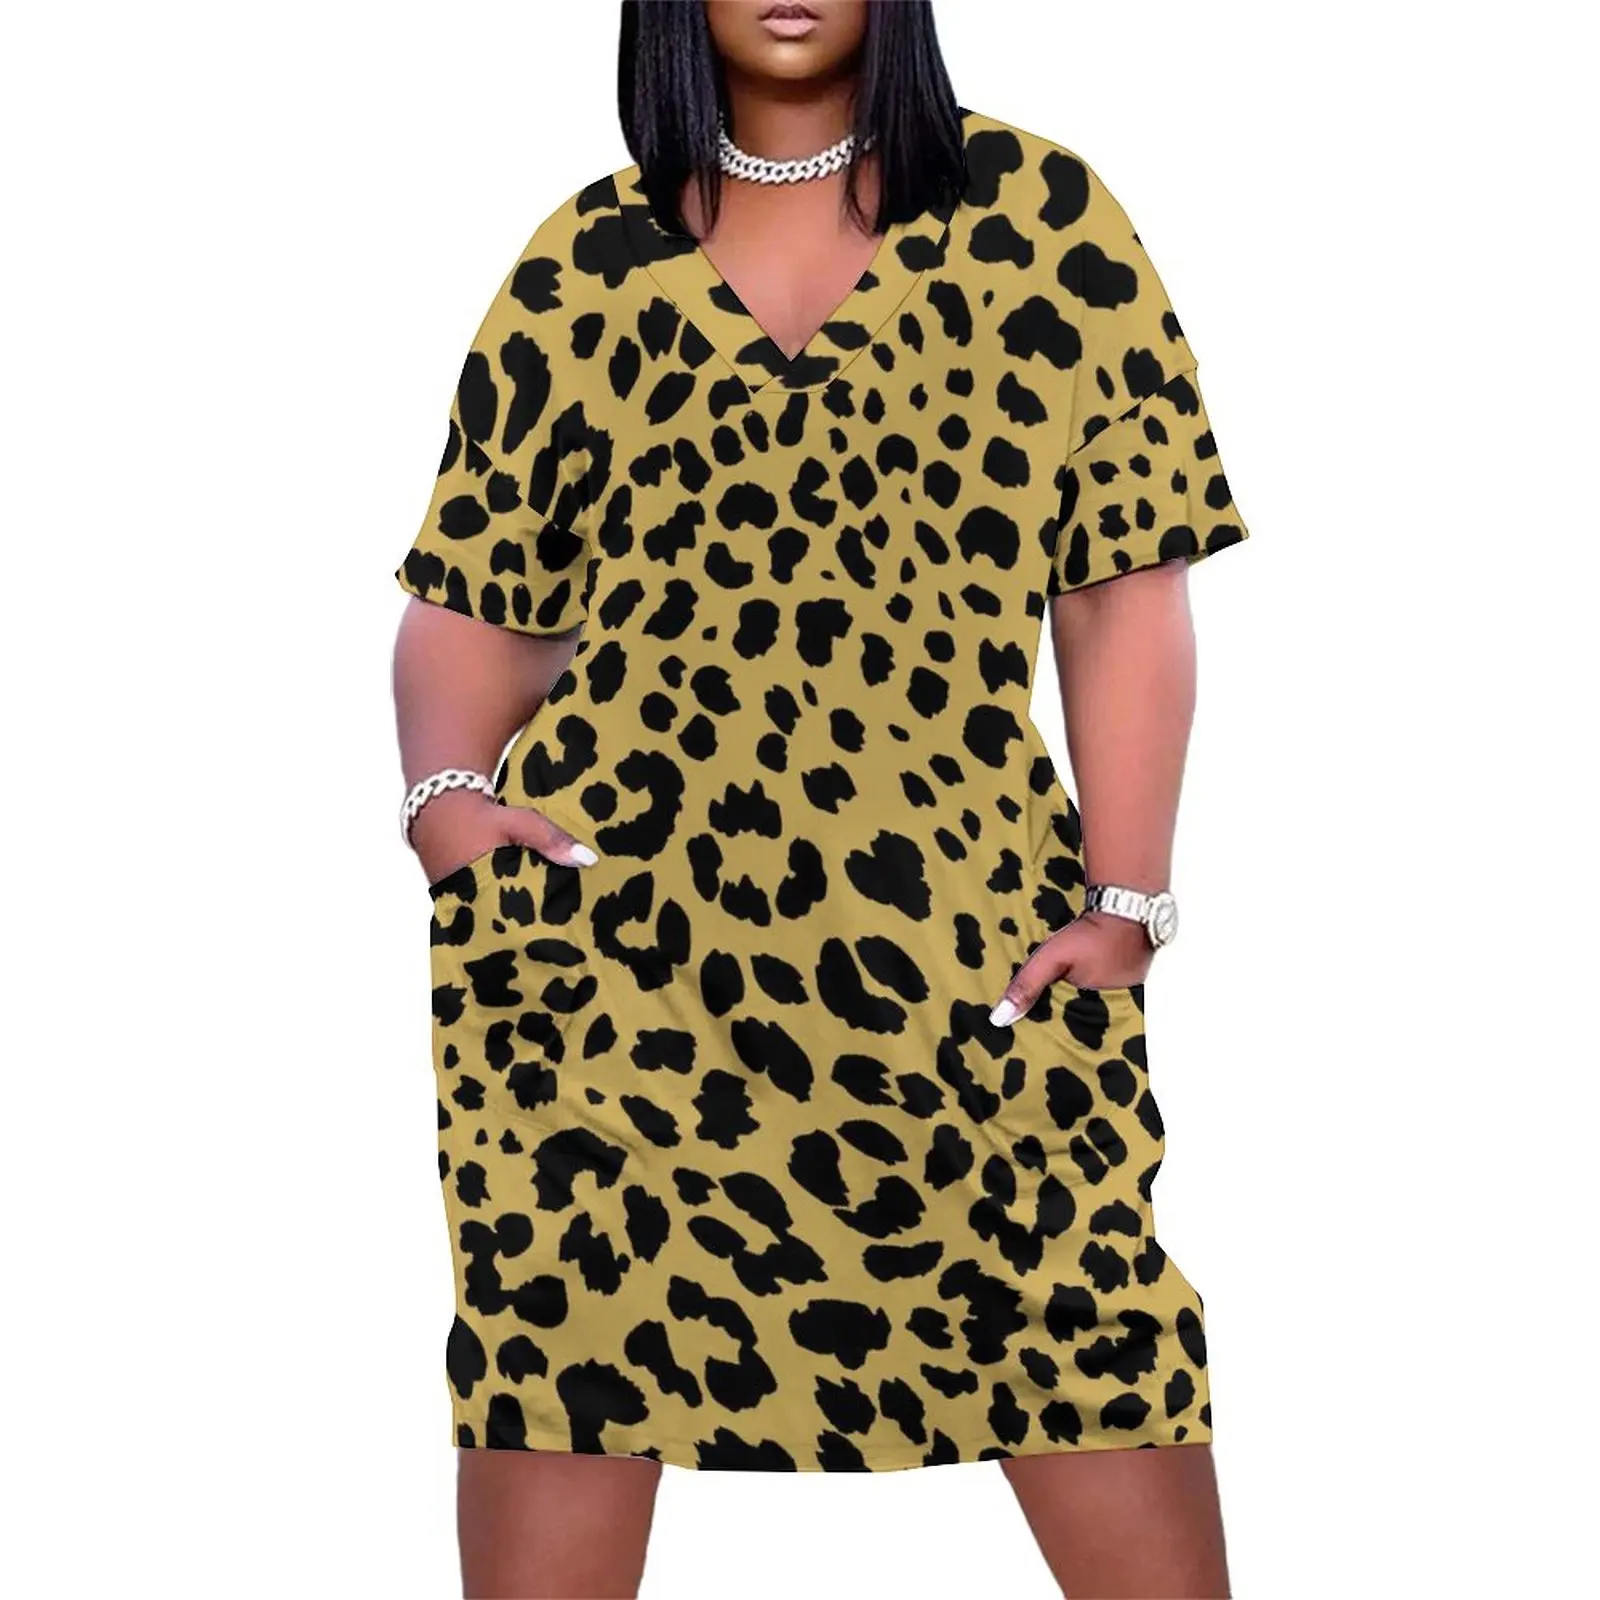 Trendy Leopard Dress Plus Size Classic Animal Print Streetwear Casual Dress Woman Summer V Neck Cute Dresses Gift Idea